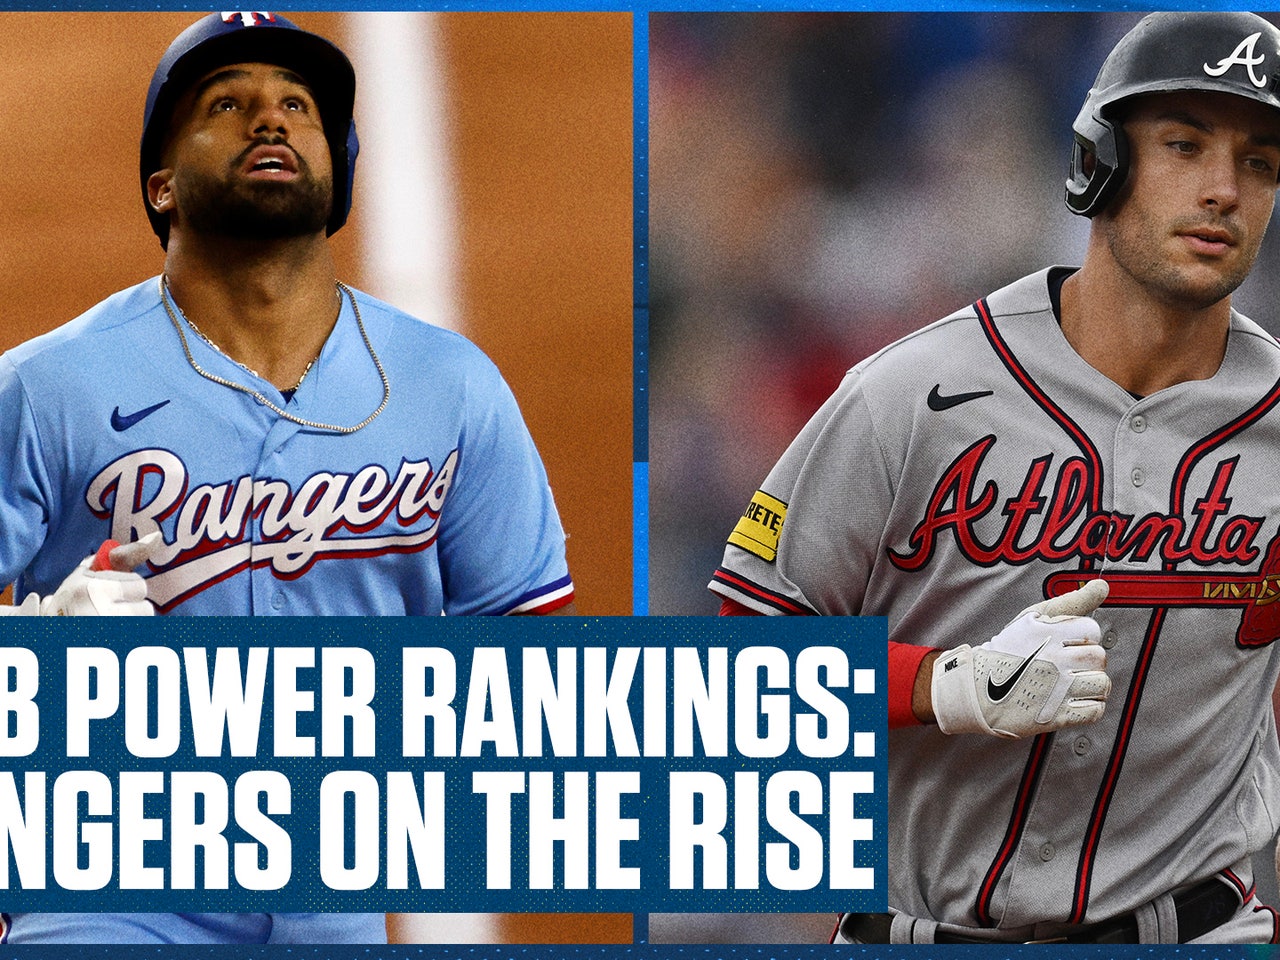 MLB Power Rankings: Braves, Astros move on up; Blue Jays